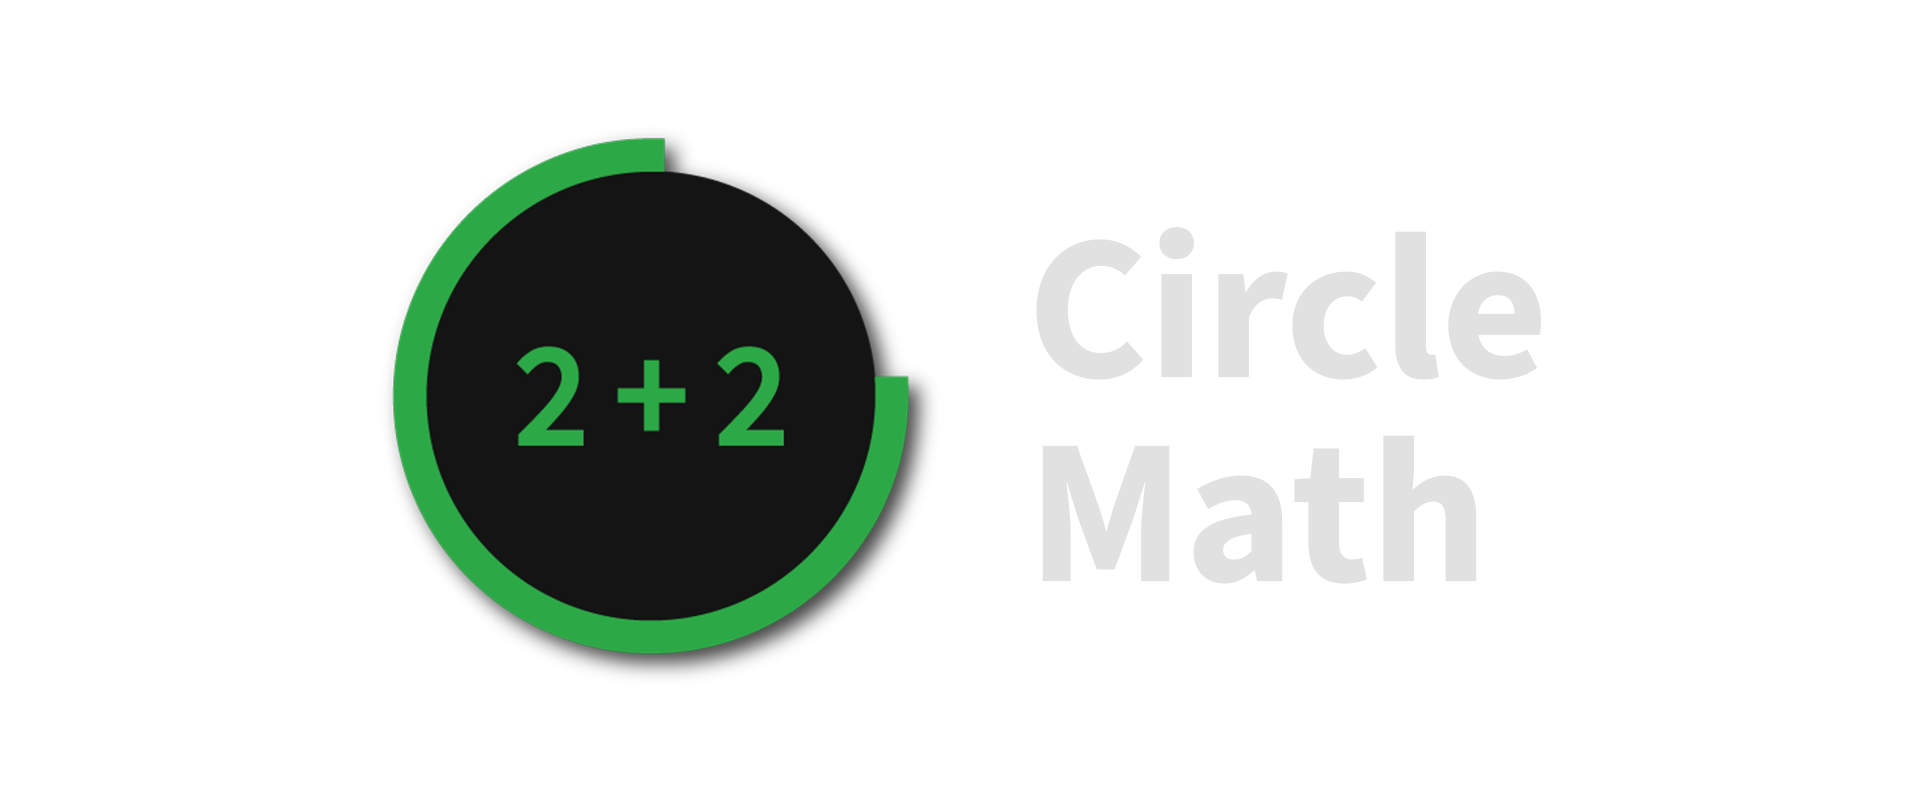 Circle Math - Modern Mental Math